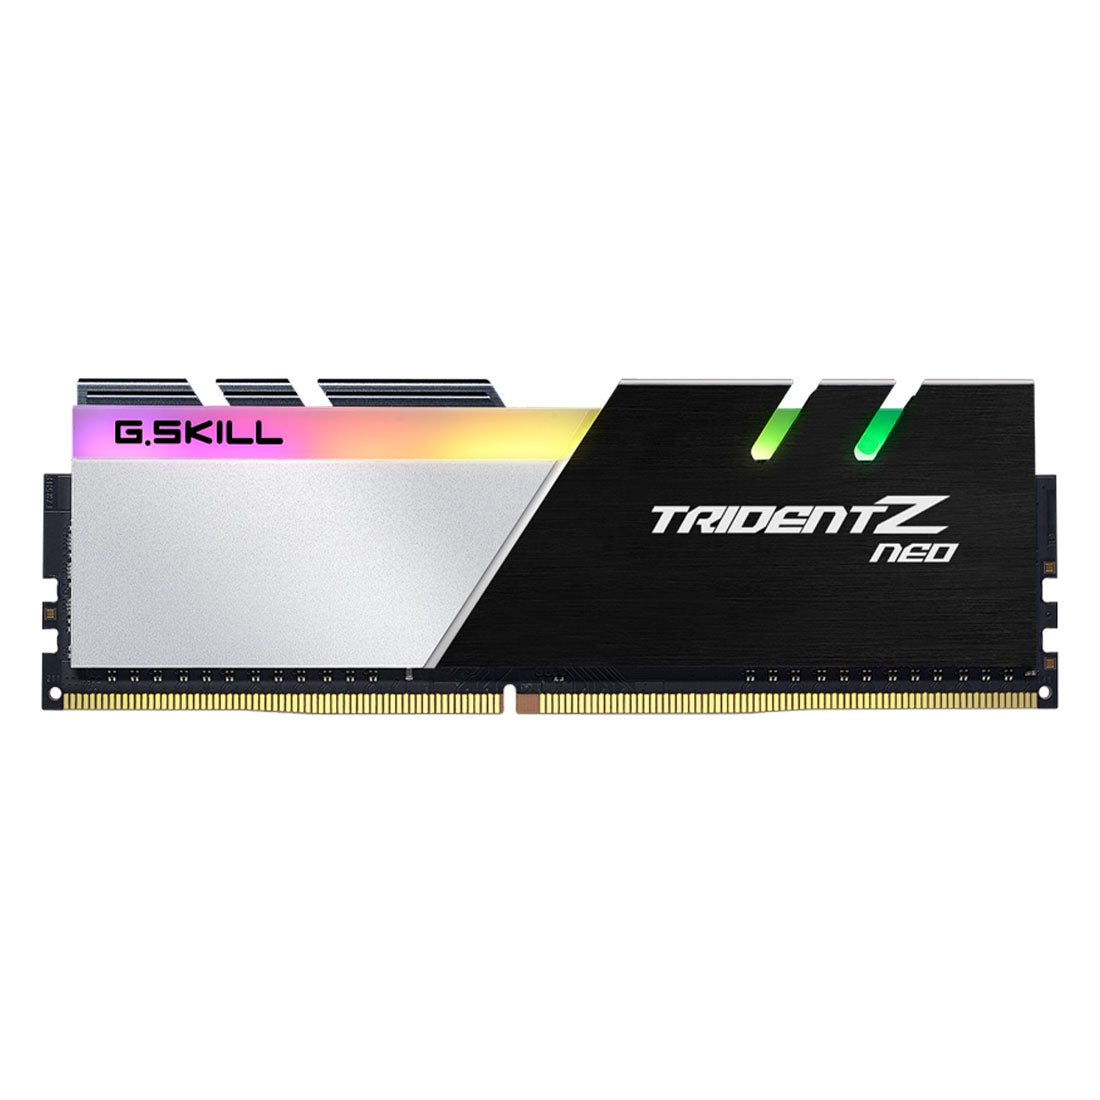 G.SKILL Trident Z Neo RAM 64GB(2x32GB) डुअल चैनल किट DDR4 3600MHz डेस्कटॉप मेमोरी 